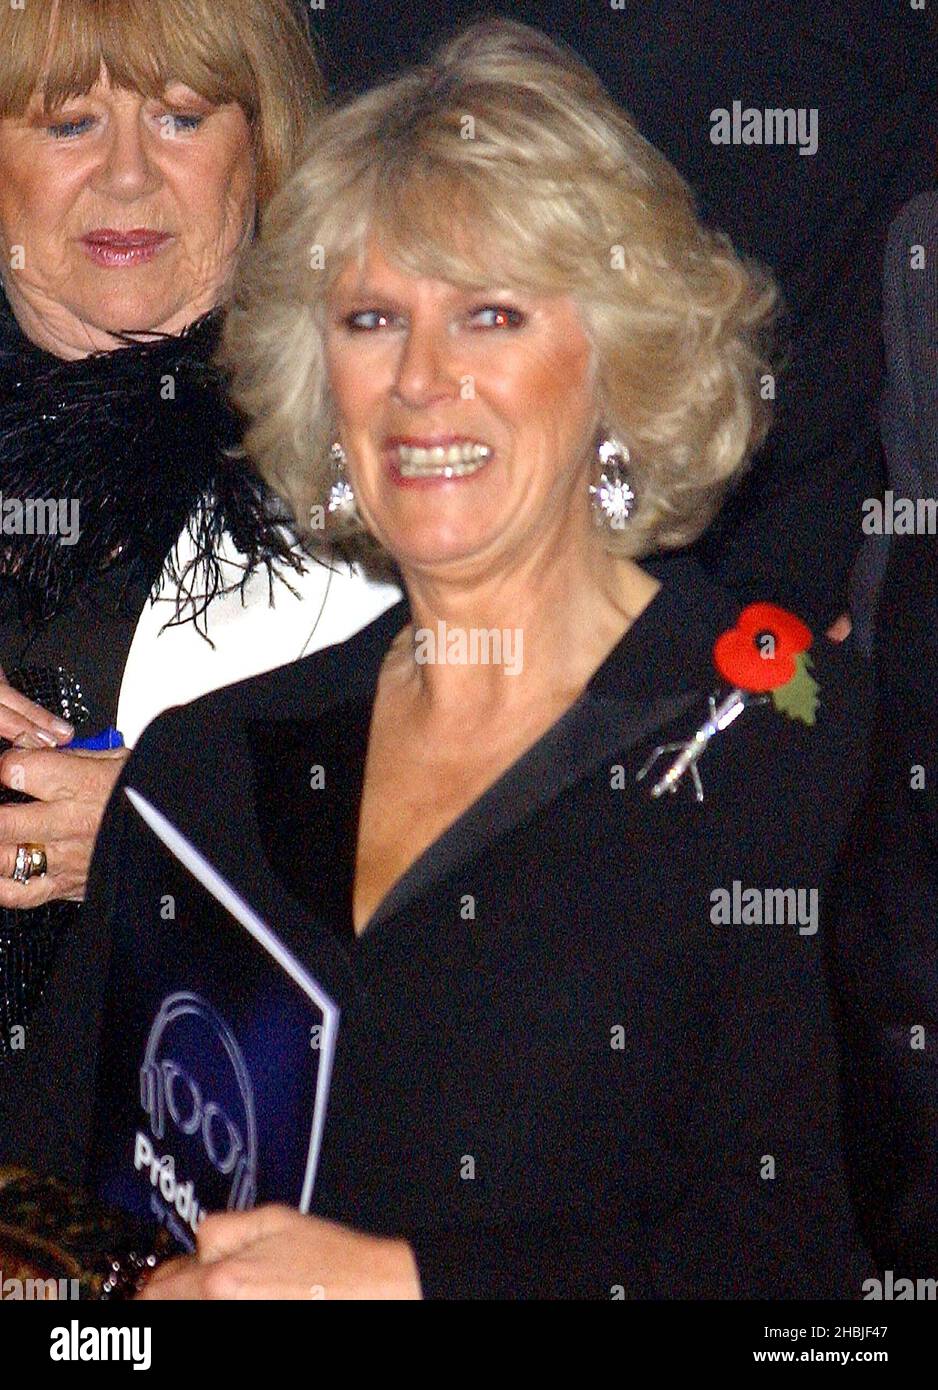 Camilla Parker Bowles at the Trevor Horn/Princes Trust concert, Wembley Arena, London. Stock Photo